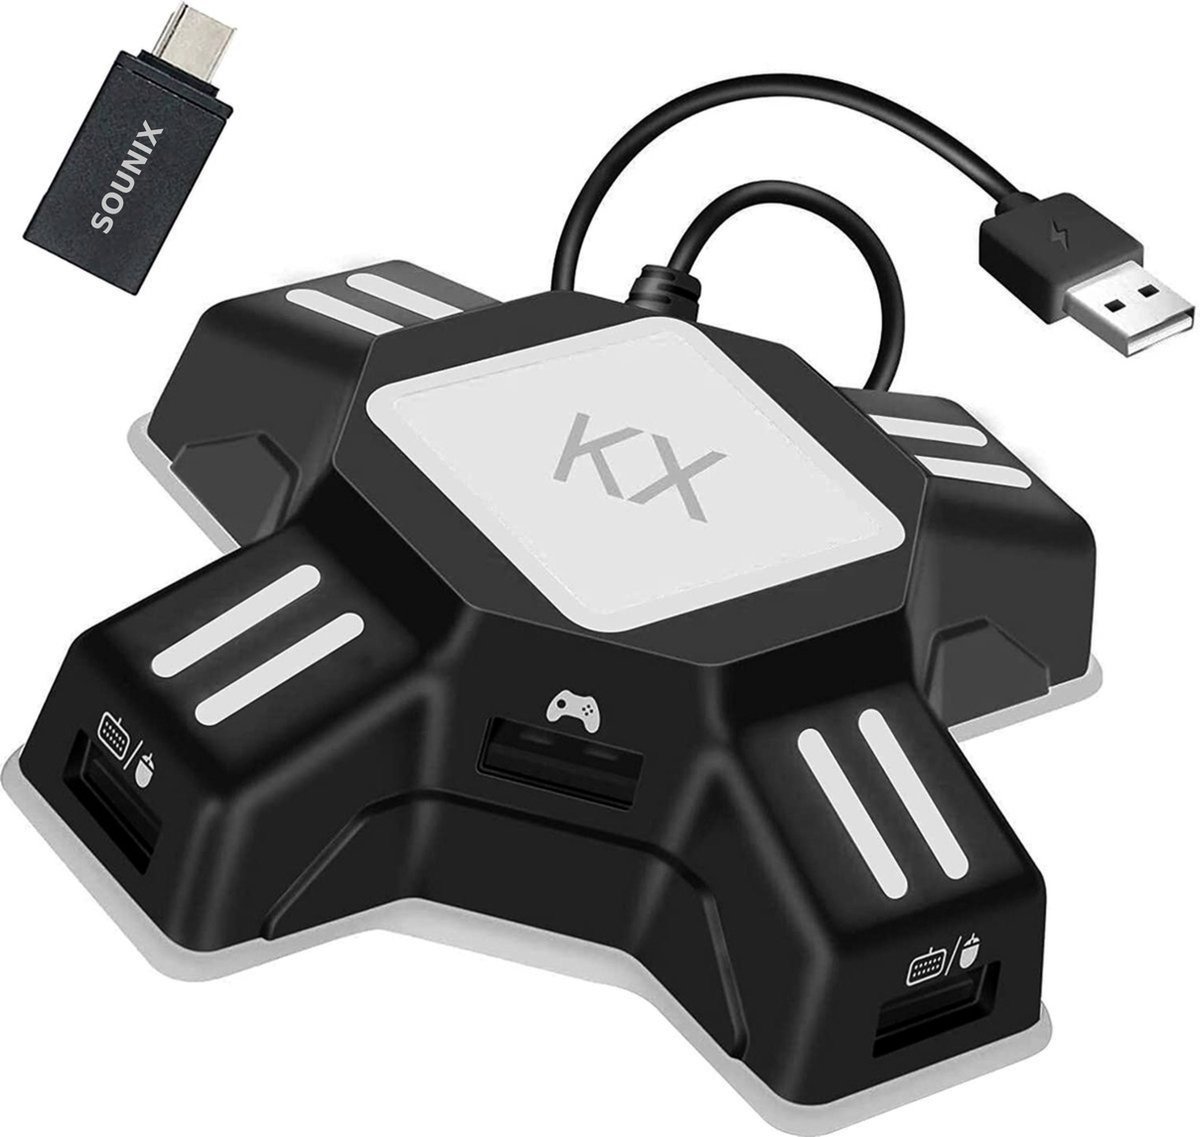 Vx 2 aimbox clavier souris gamepad adaptateur contrôleur convertiss